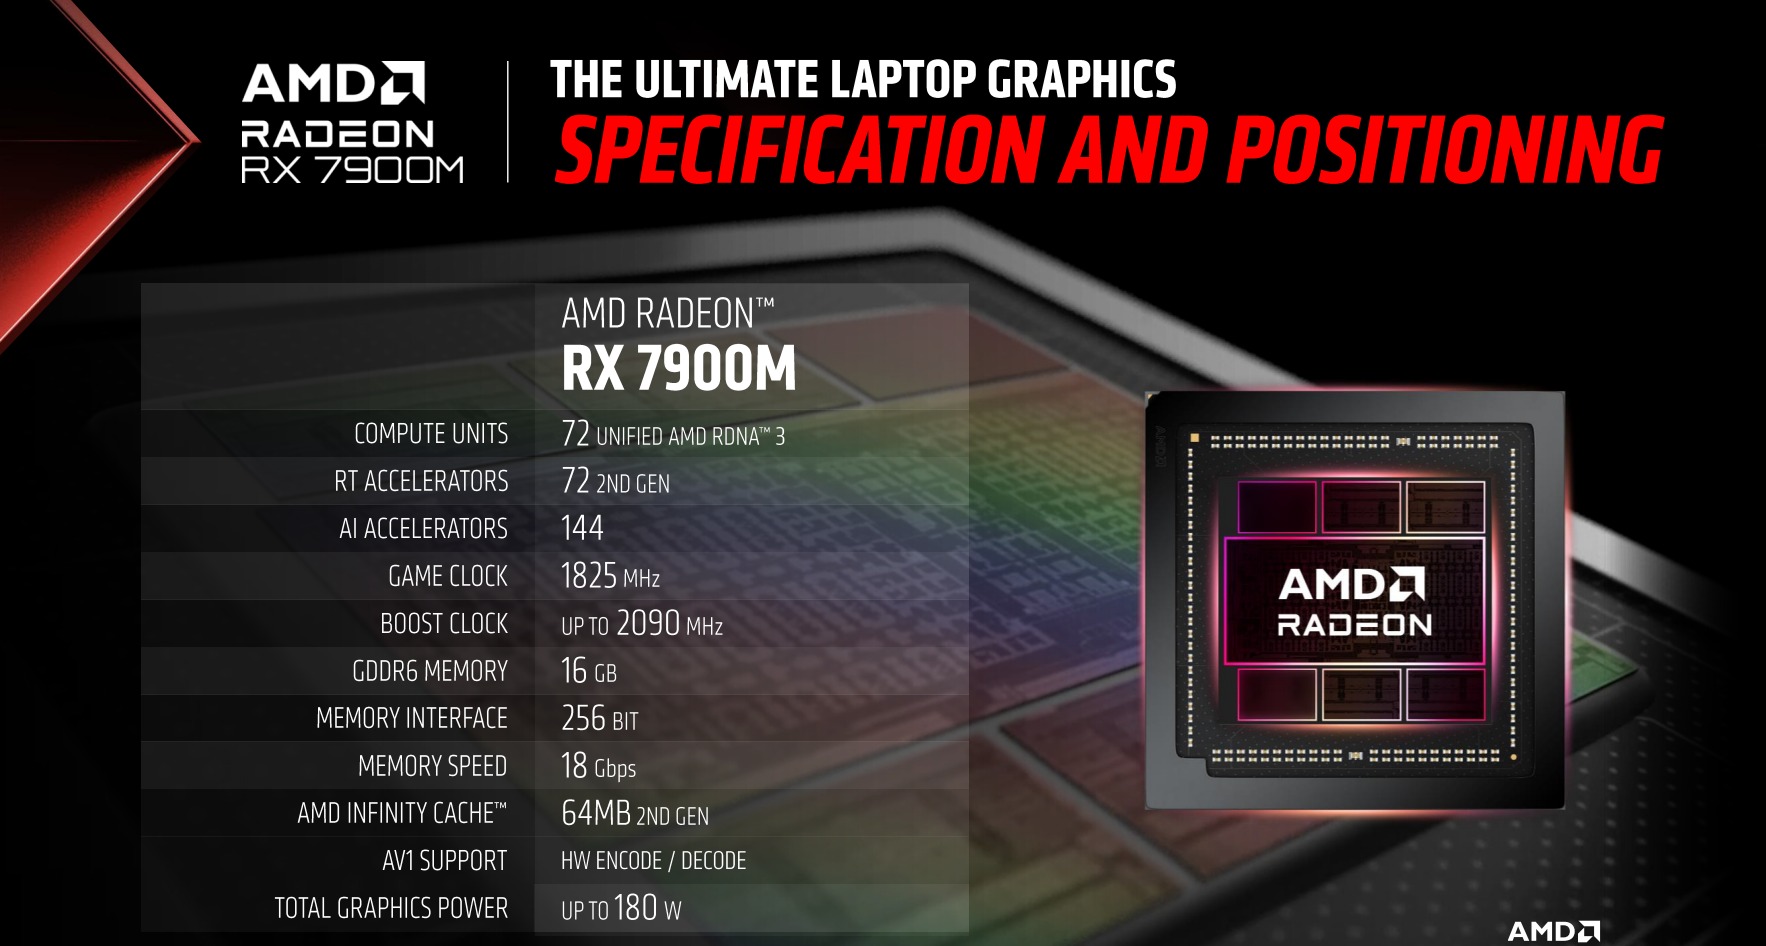 Minisforum showcases its first Intel Core Ultra mini PC, and also unveils  AMD RX 7600M XT mini PC